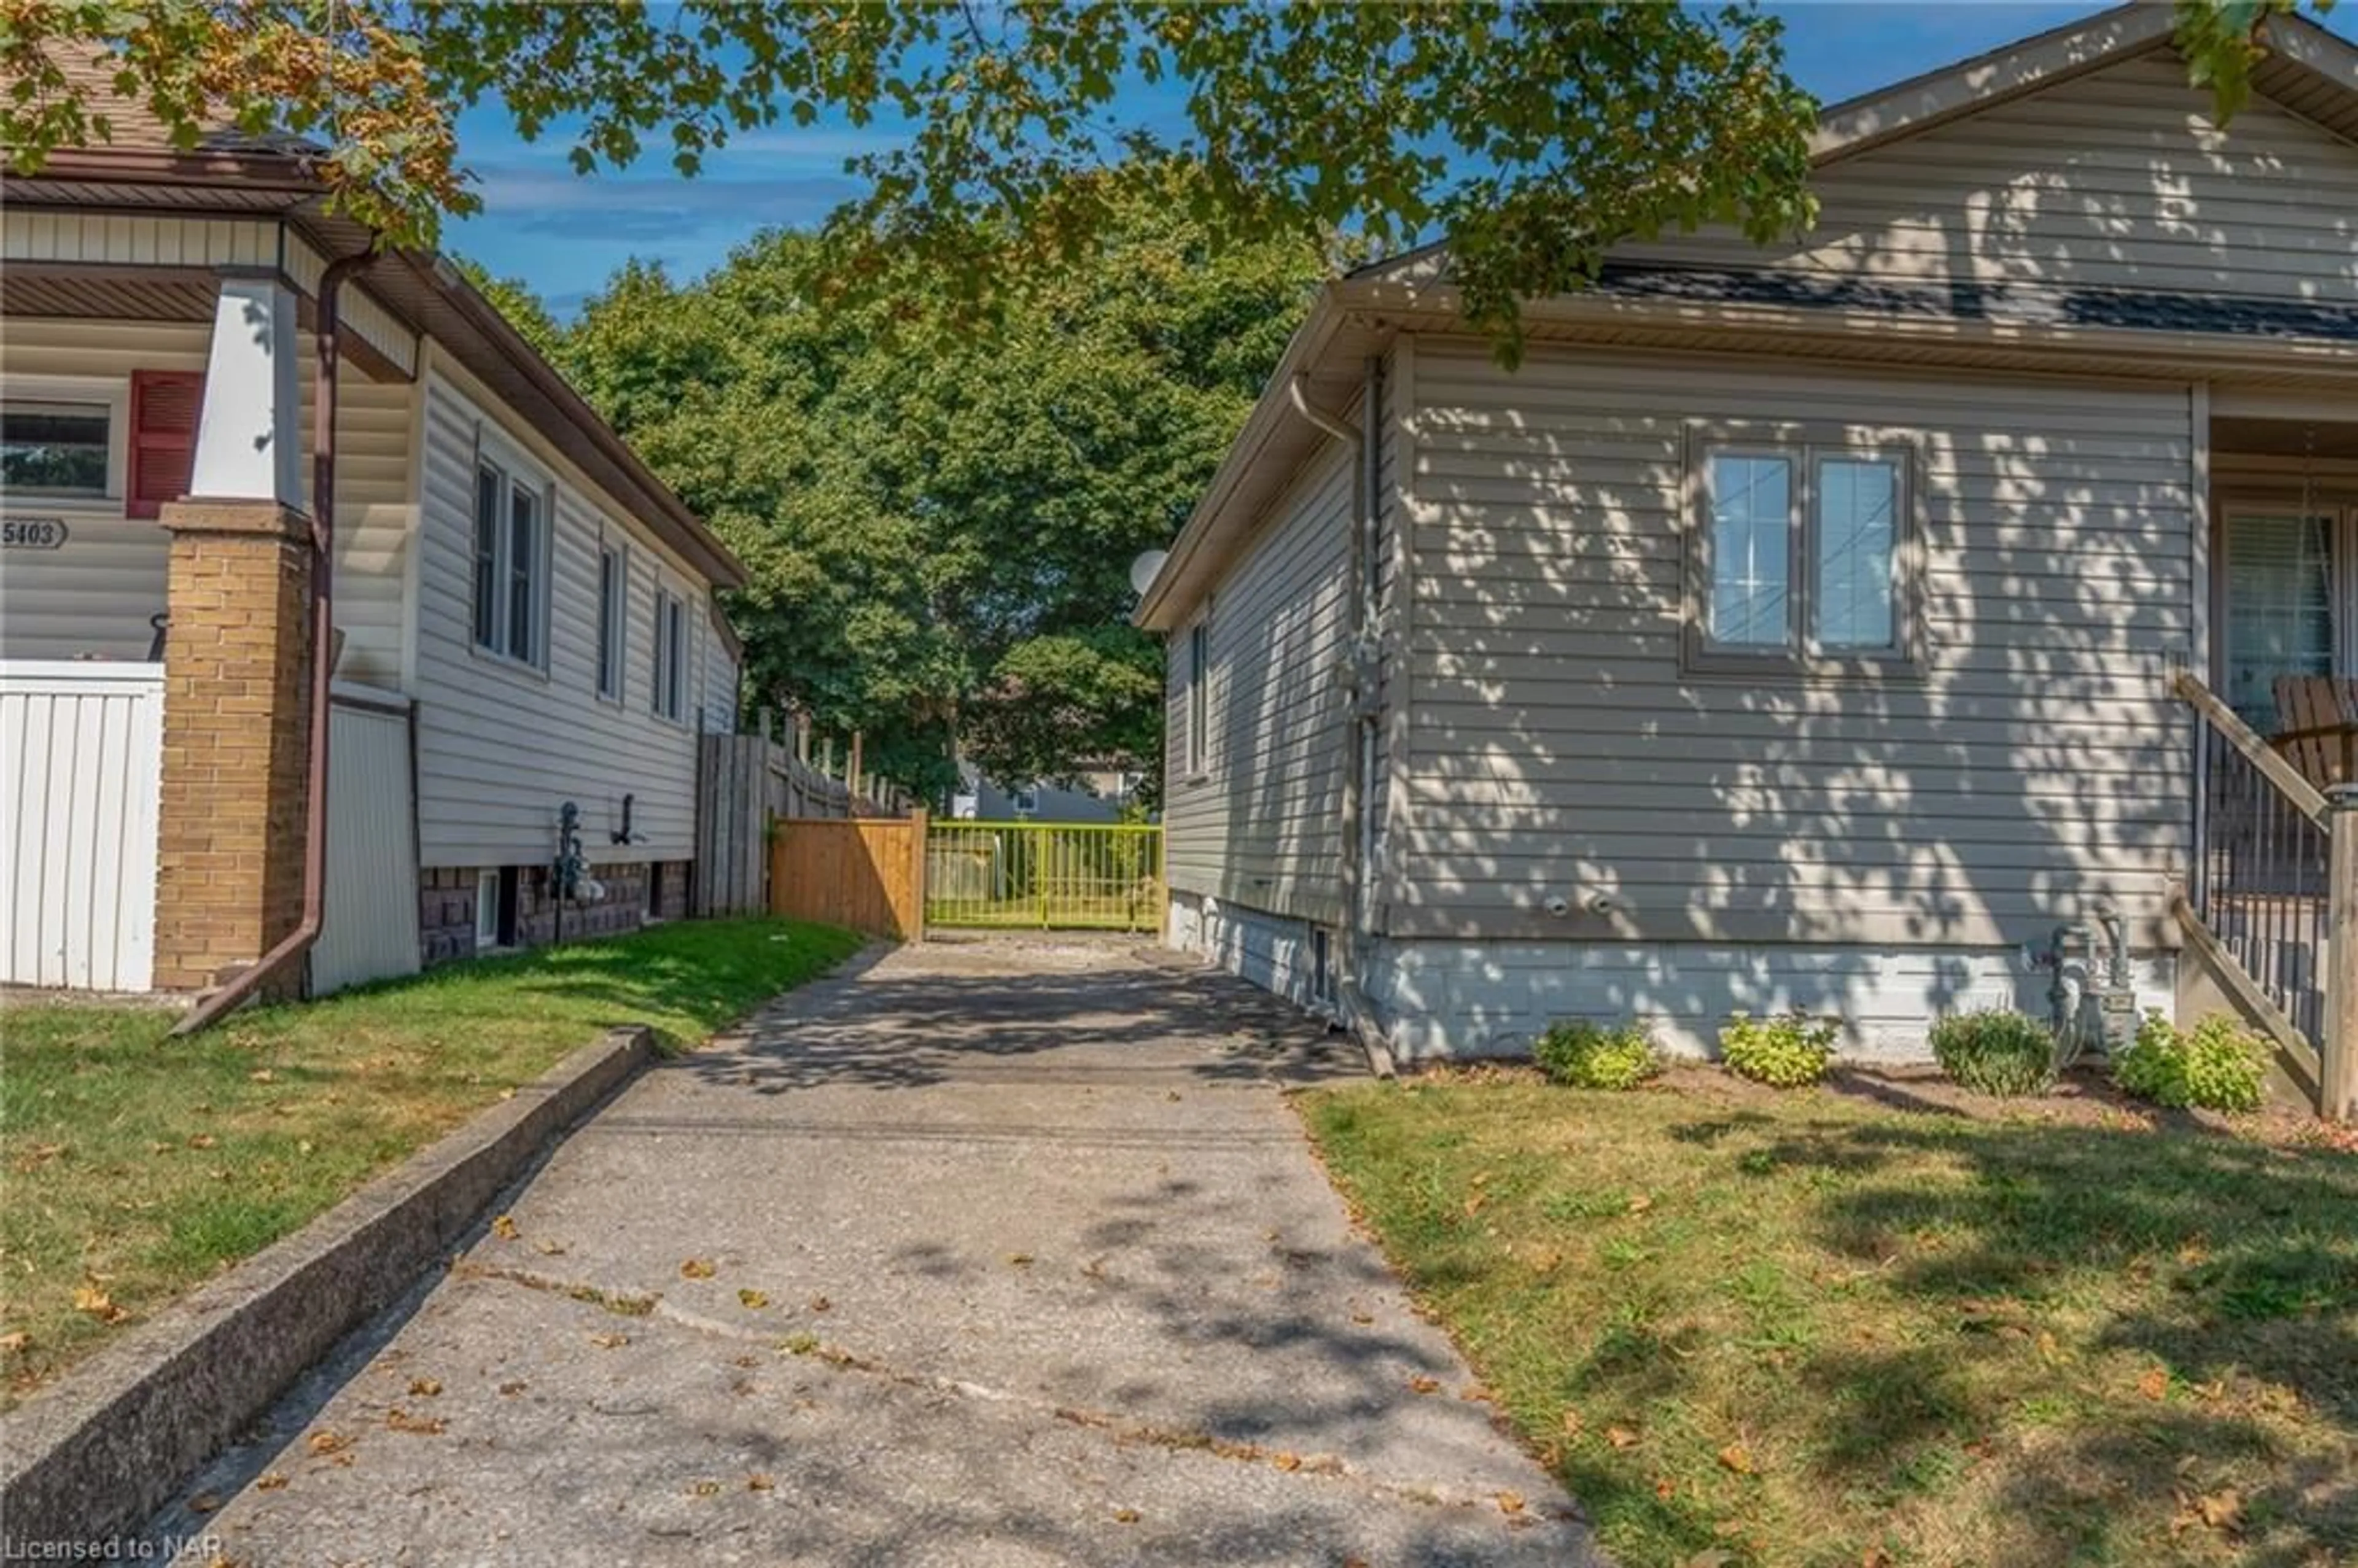 Frontside or backside of a home for 5397 Elm St, Niagara Falls Ontario L2E 2V5